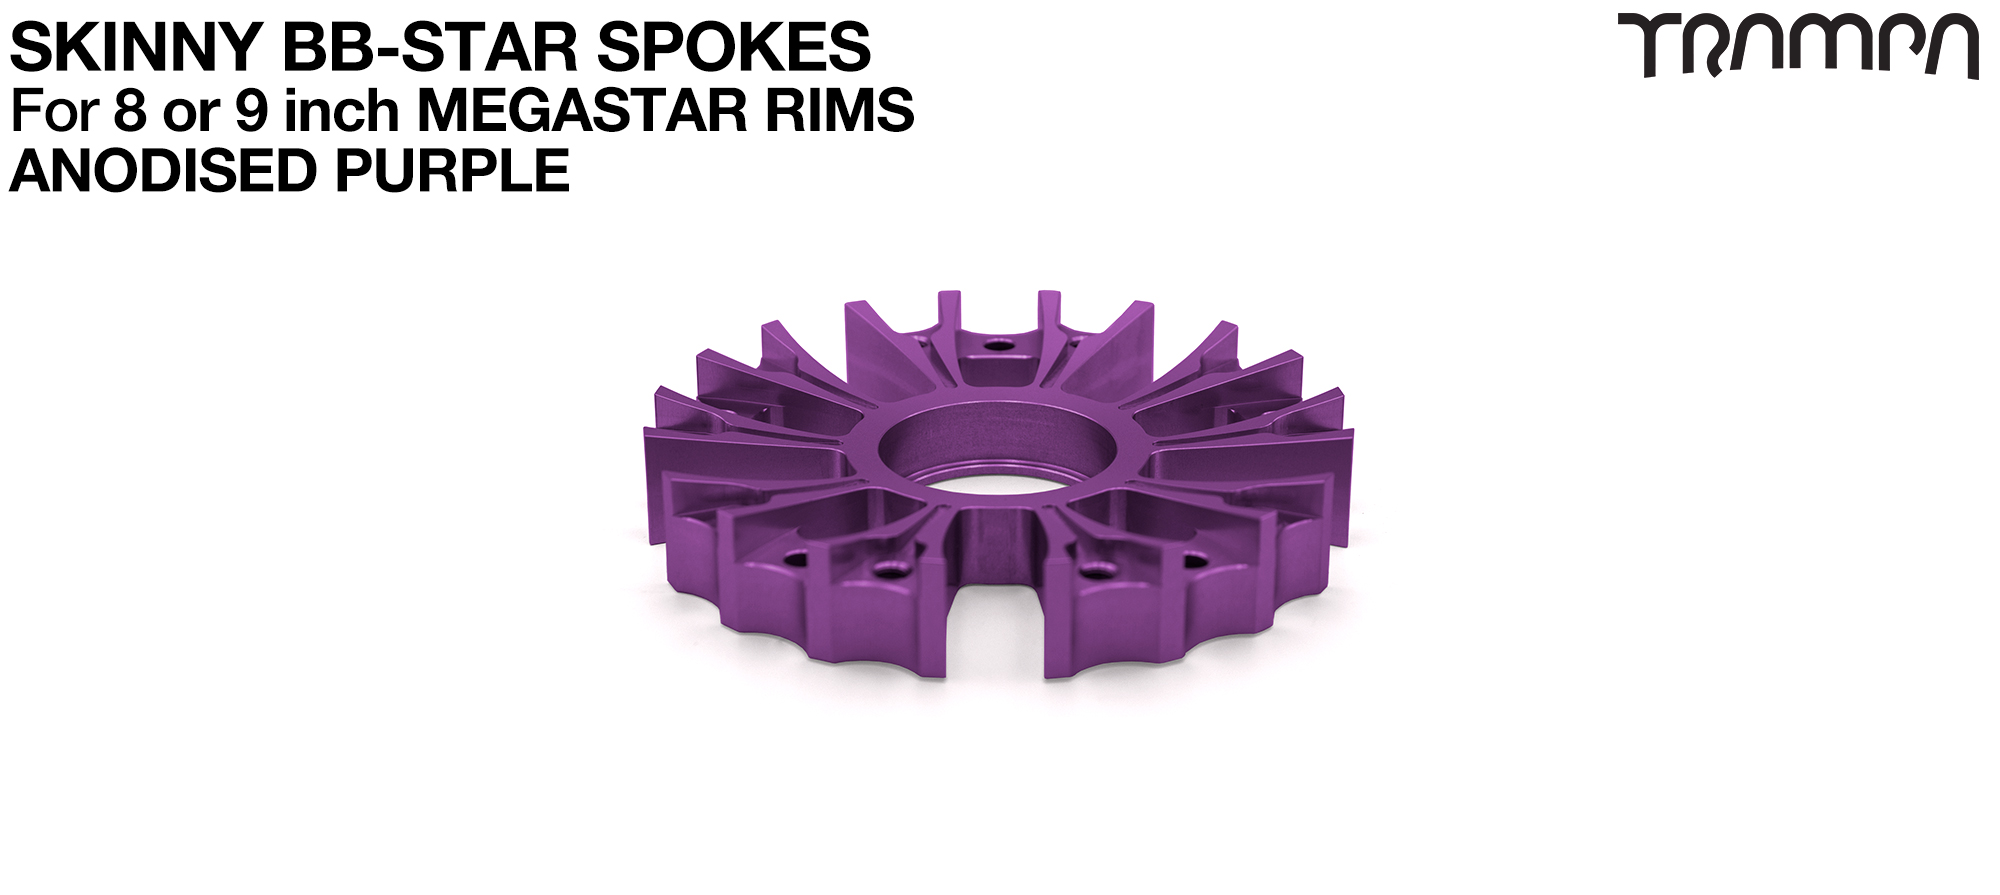 BBStar SKINNY Spoke for MEGASTAR 8 & 9 Rims - Extruded T6 Heat Treated & CNC Precision milled - PURPLE